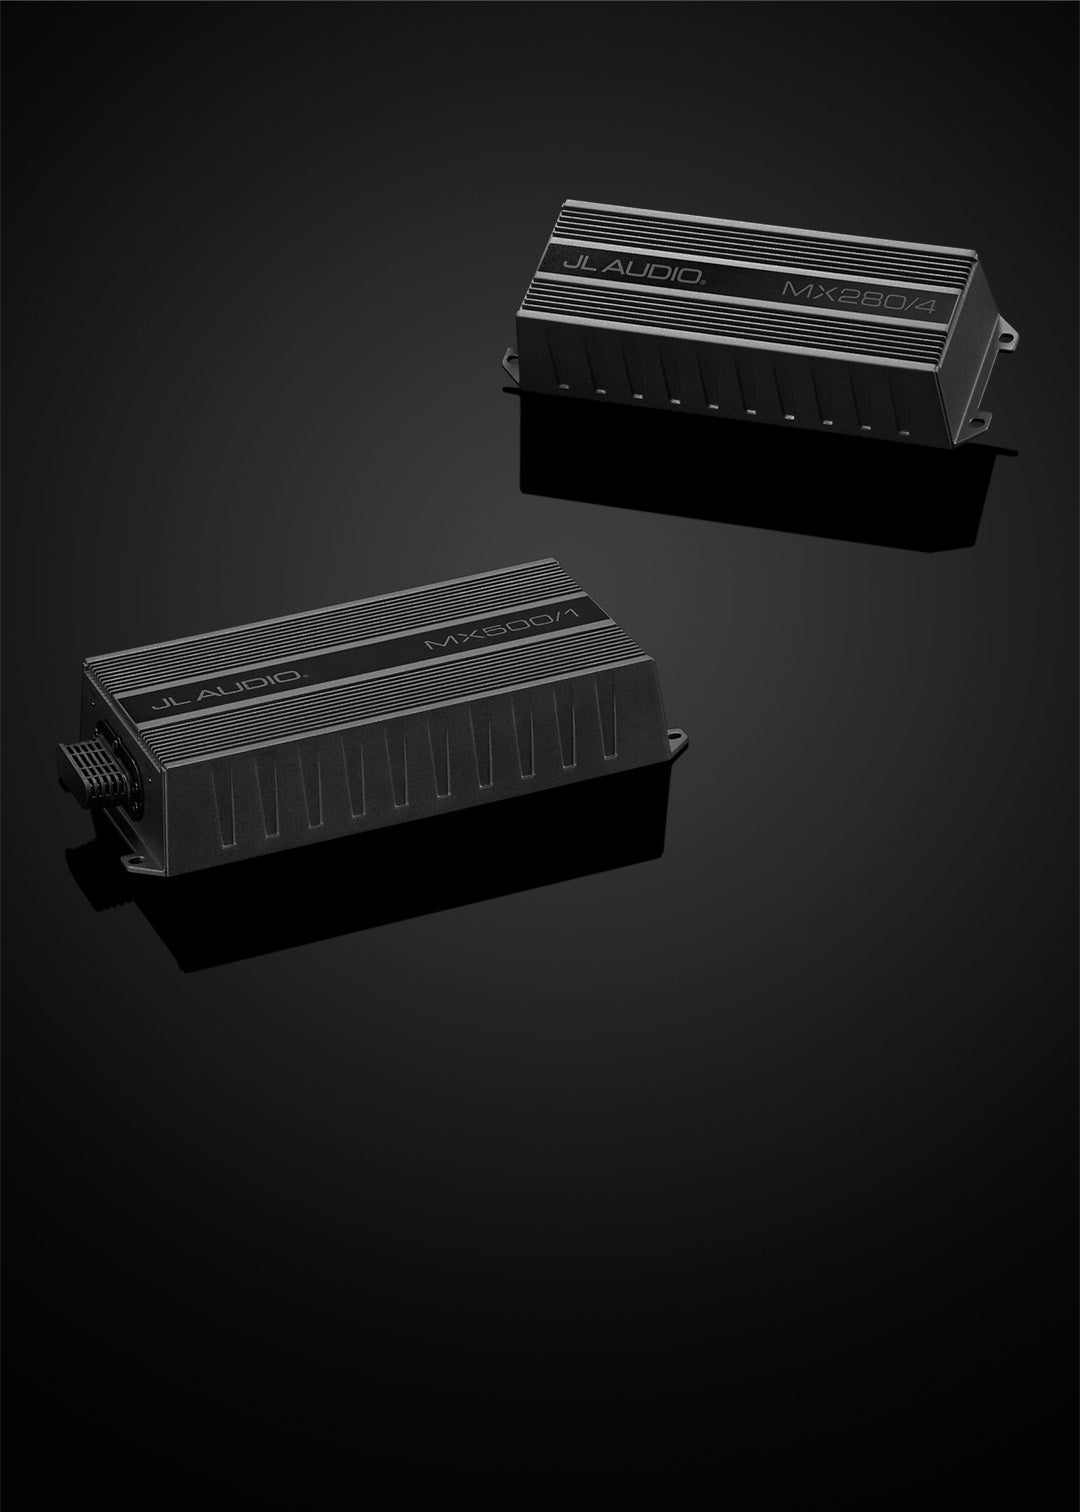 A pair of MX amplifiers in a dark sleek setting.